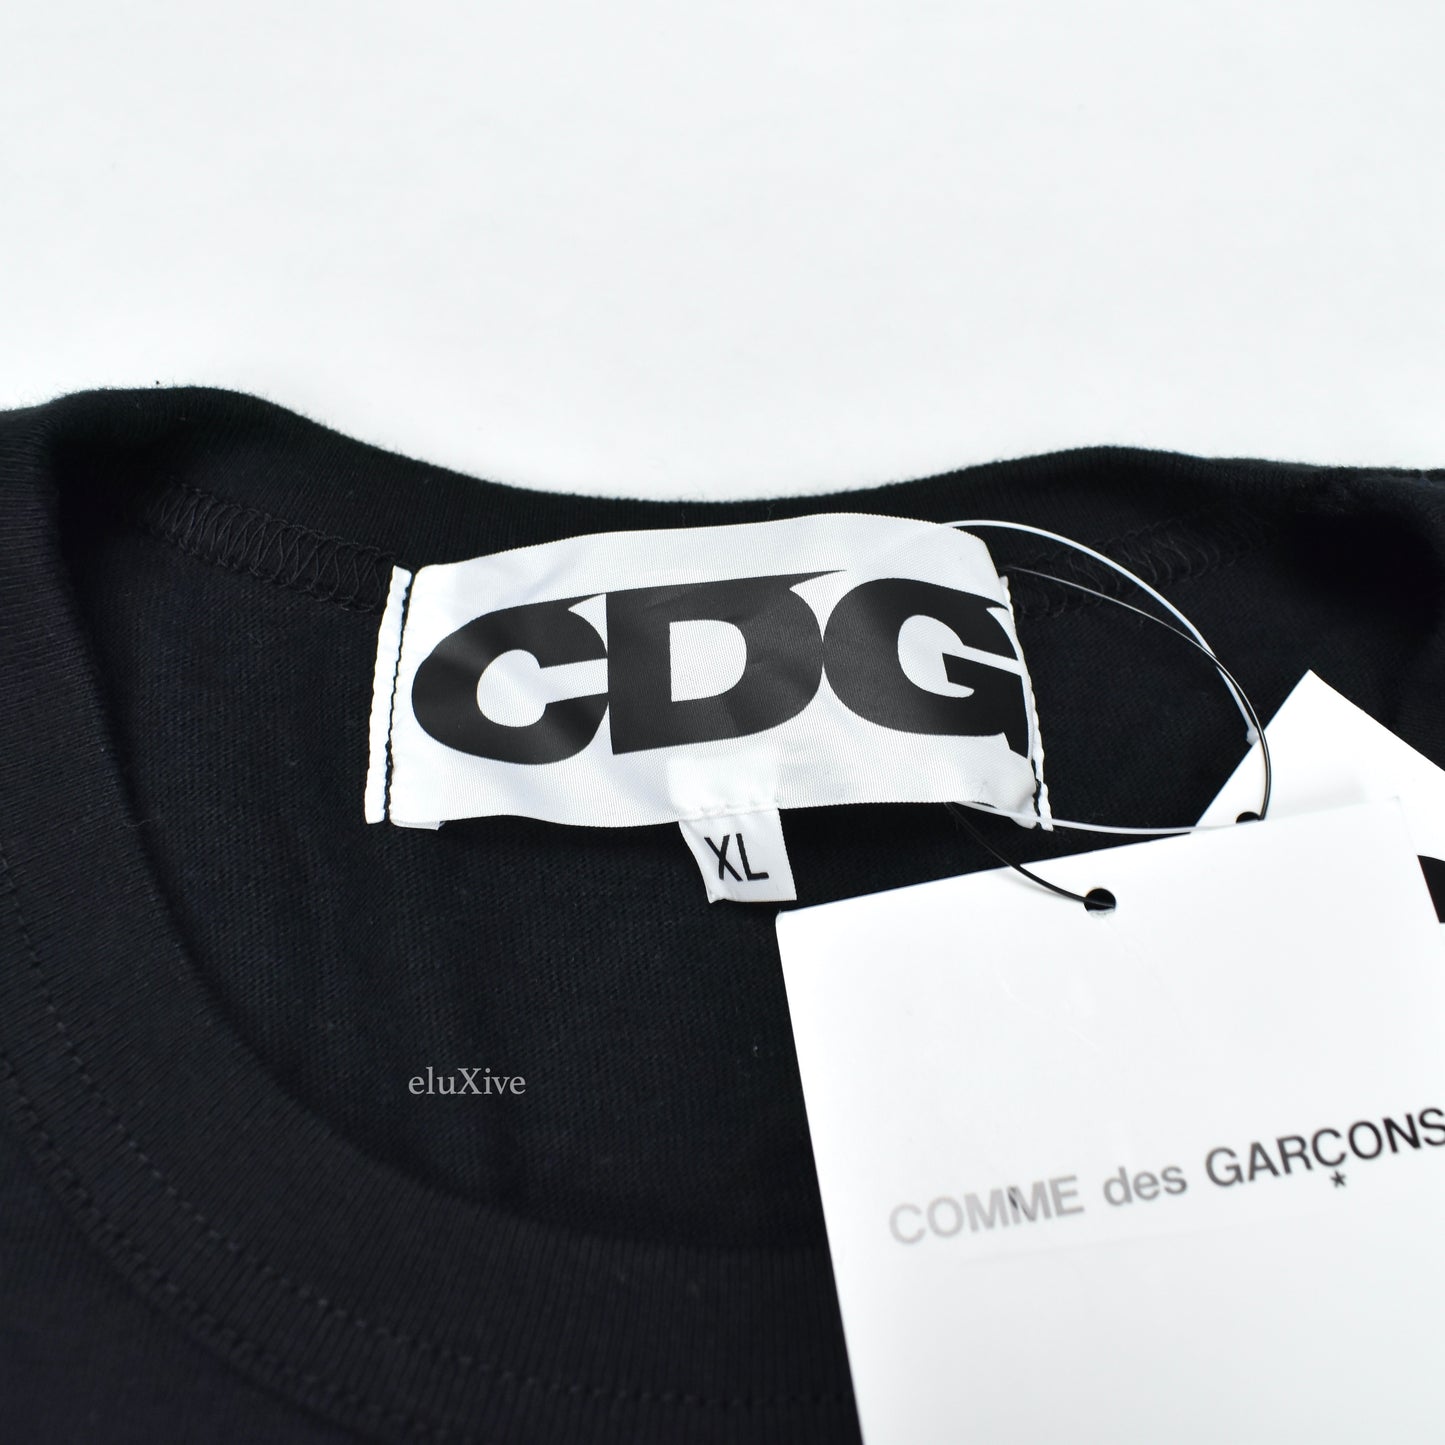 Comme des Garcons x Medicom - CDG Bearbrick Logo L/S T-Shirt (Black)